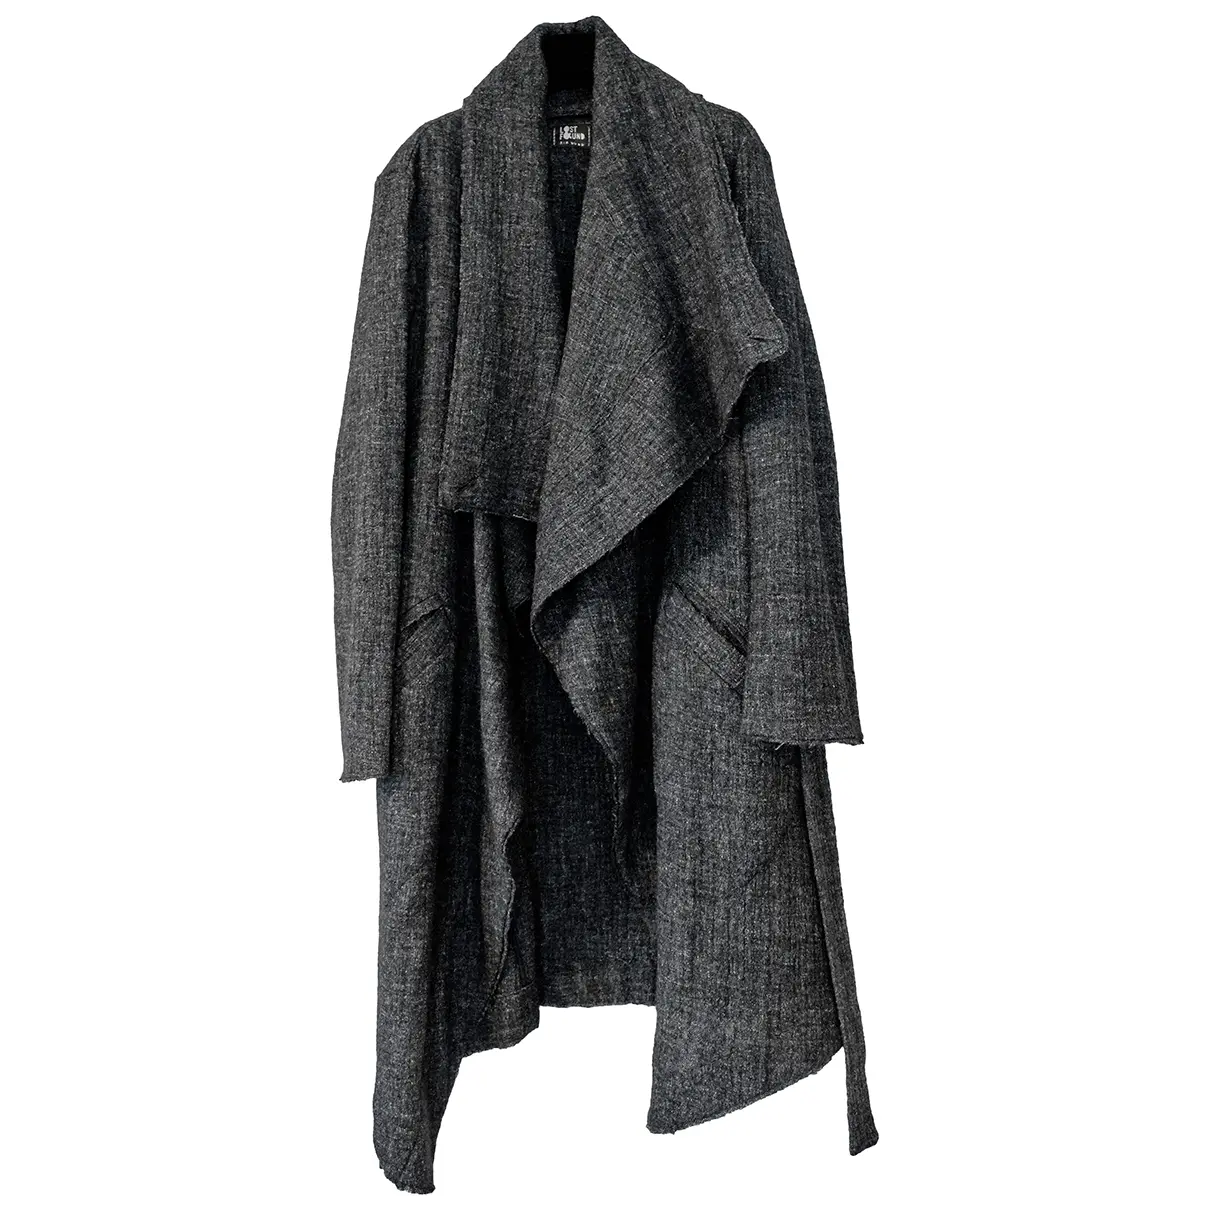 Wool coat LOST & FOUND RIA DUNN